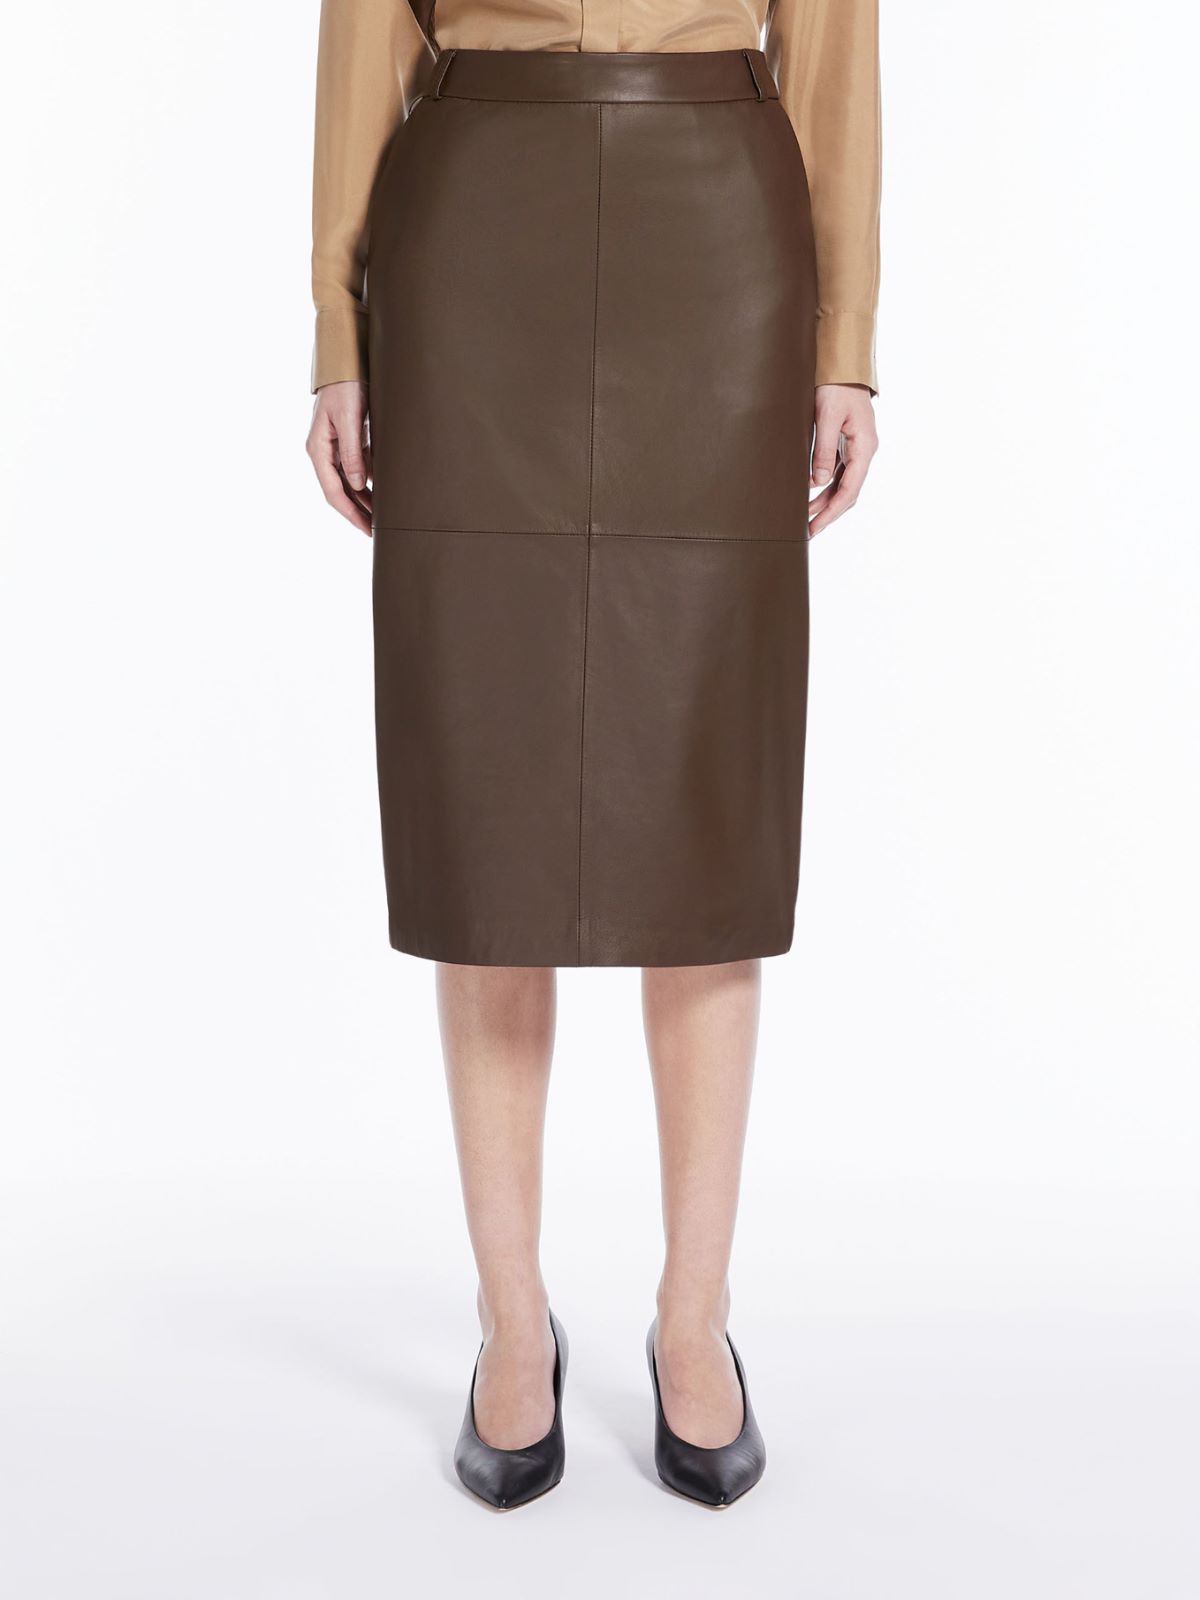 Nappa leather pencil skirt - CHOCOLATE - Weekend Max Mara - 2